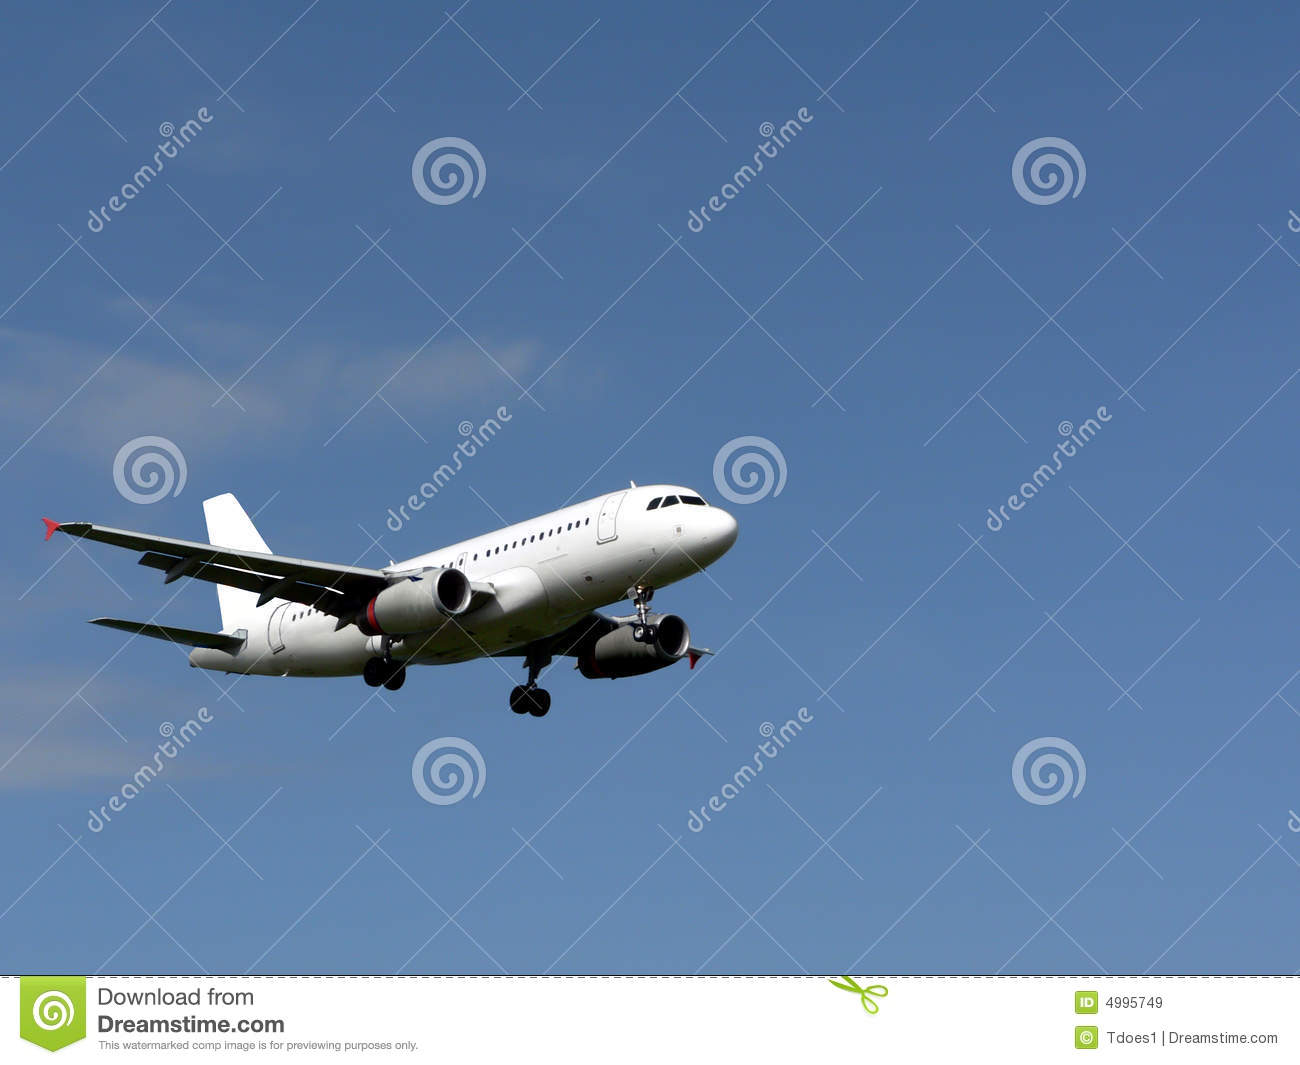 More Similar Stock Images Of   Jet Plane In Flight   Landing Side View    